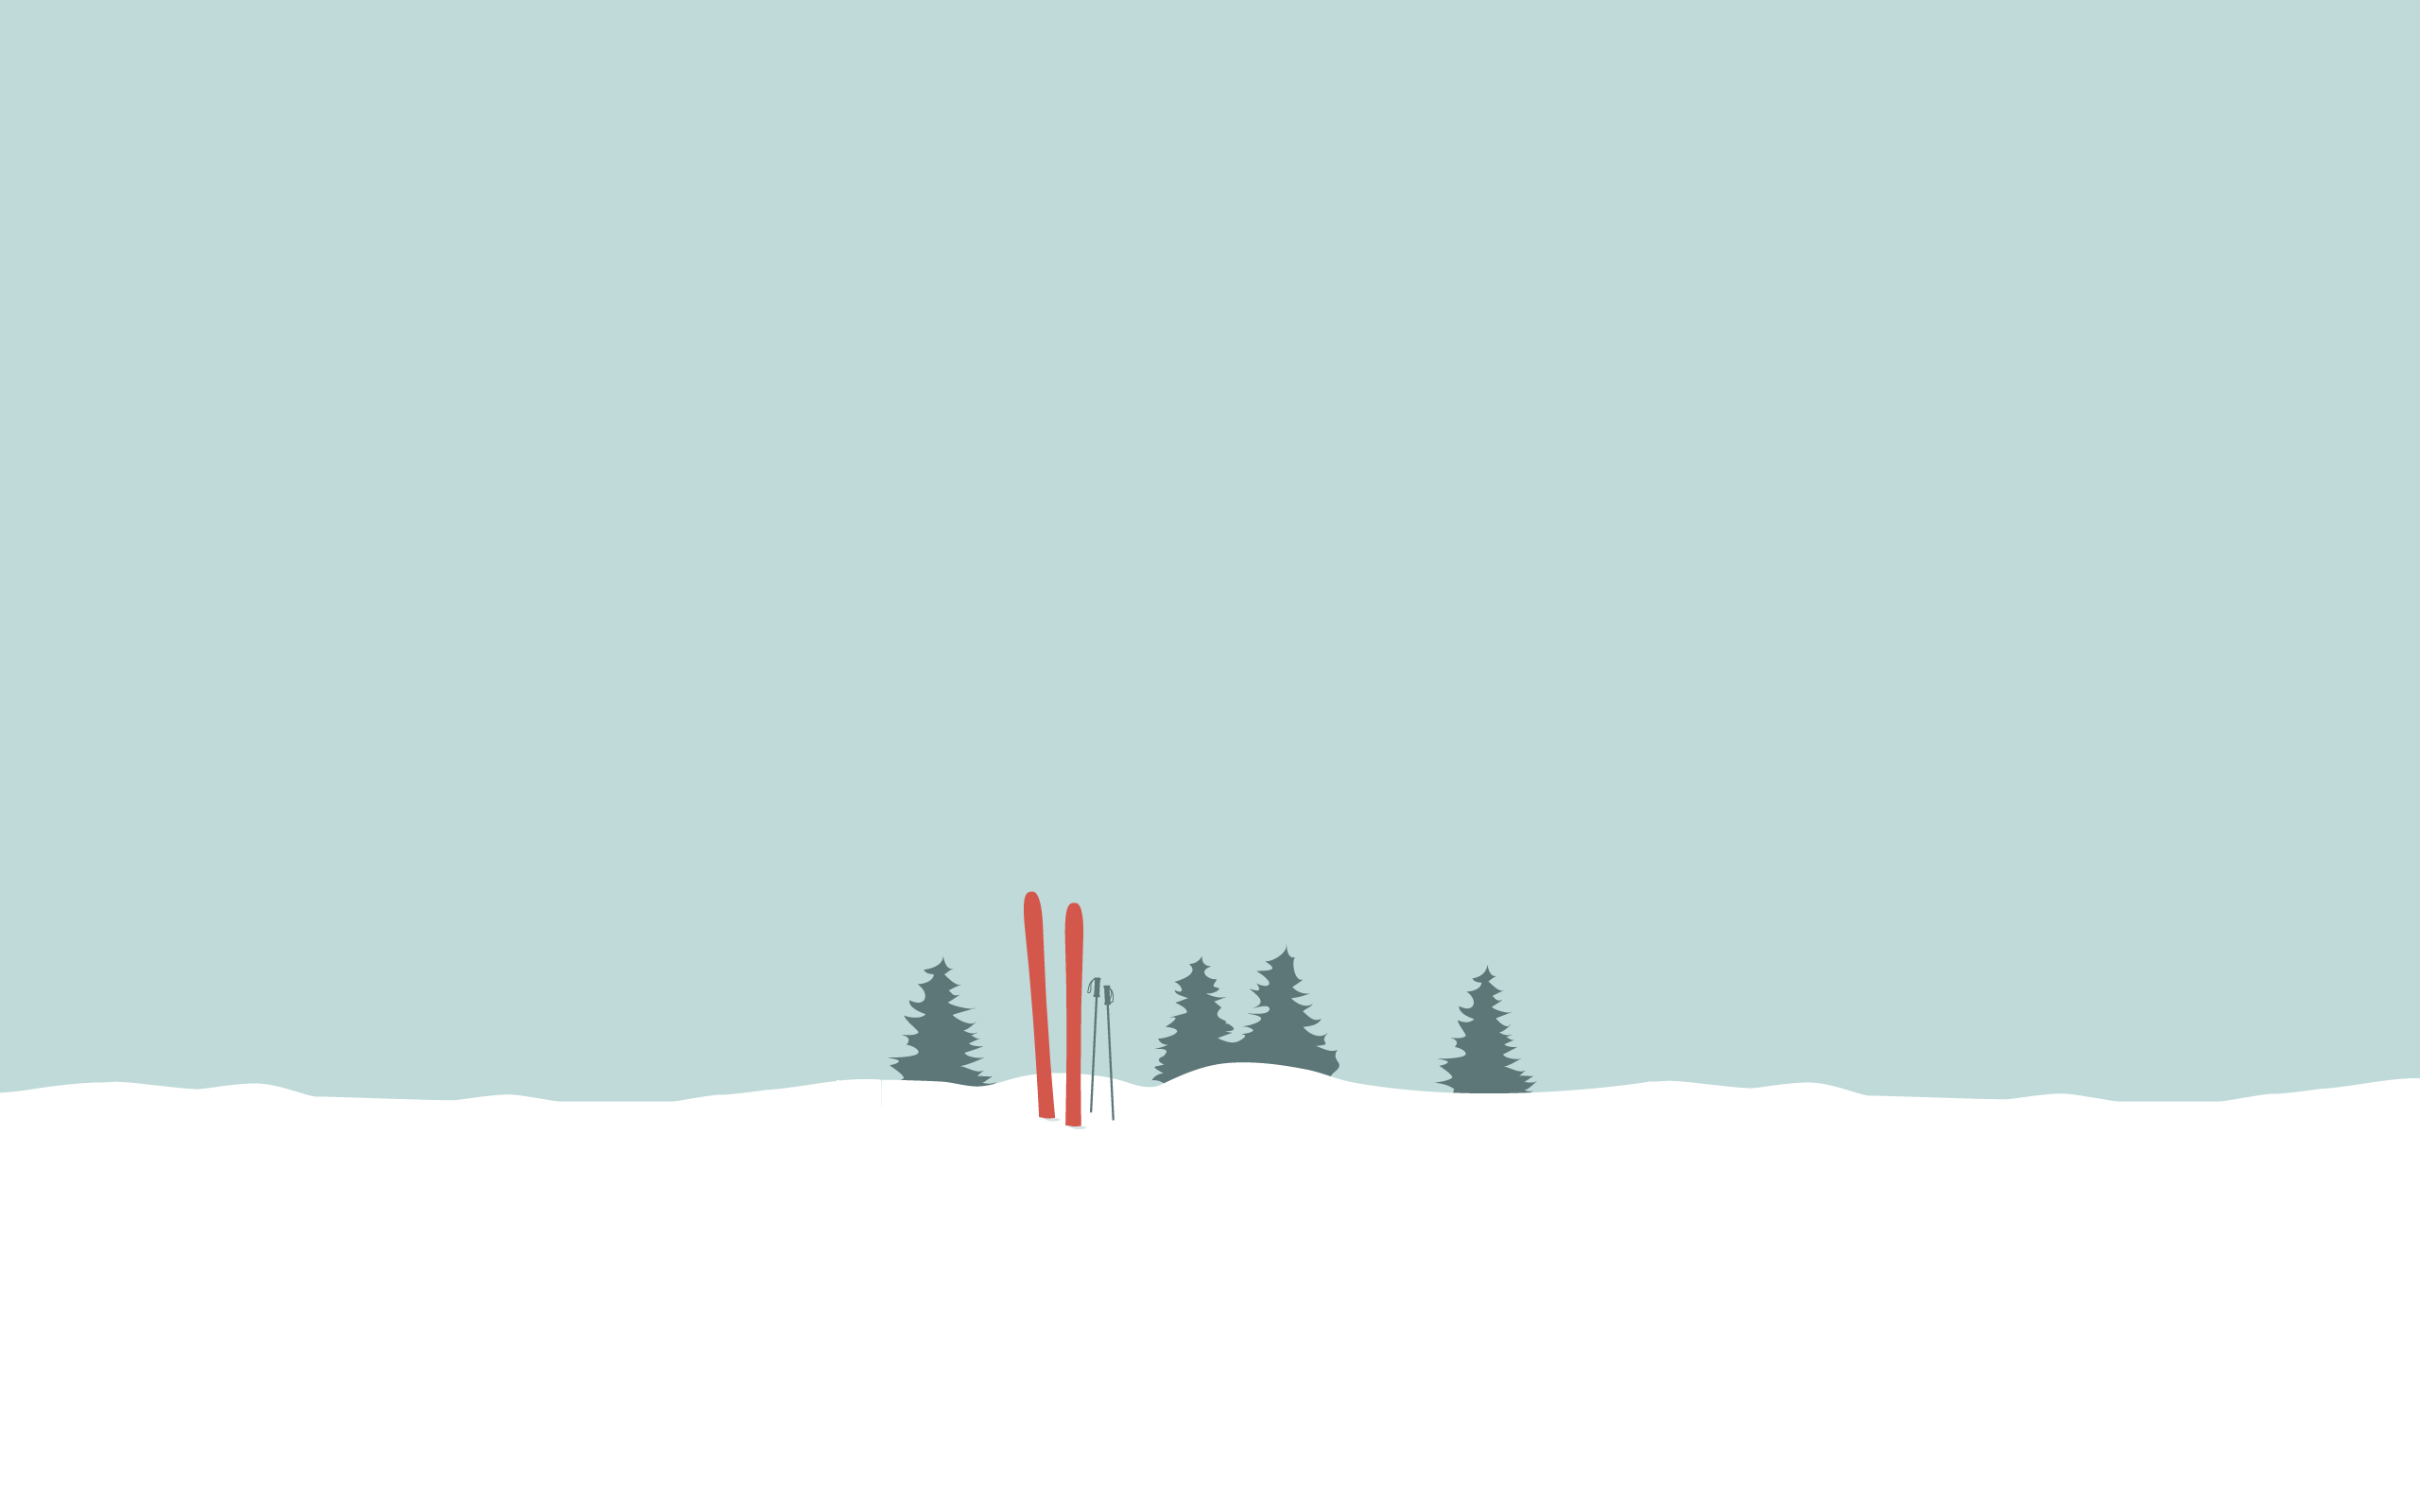 General 2560x1600 winter snow pine trees skis minimalism